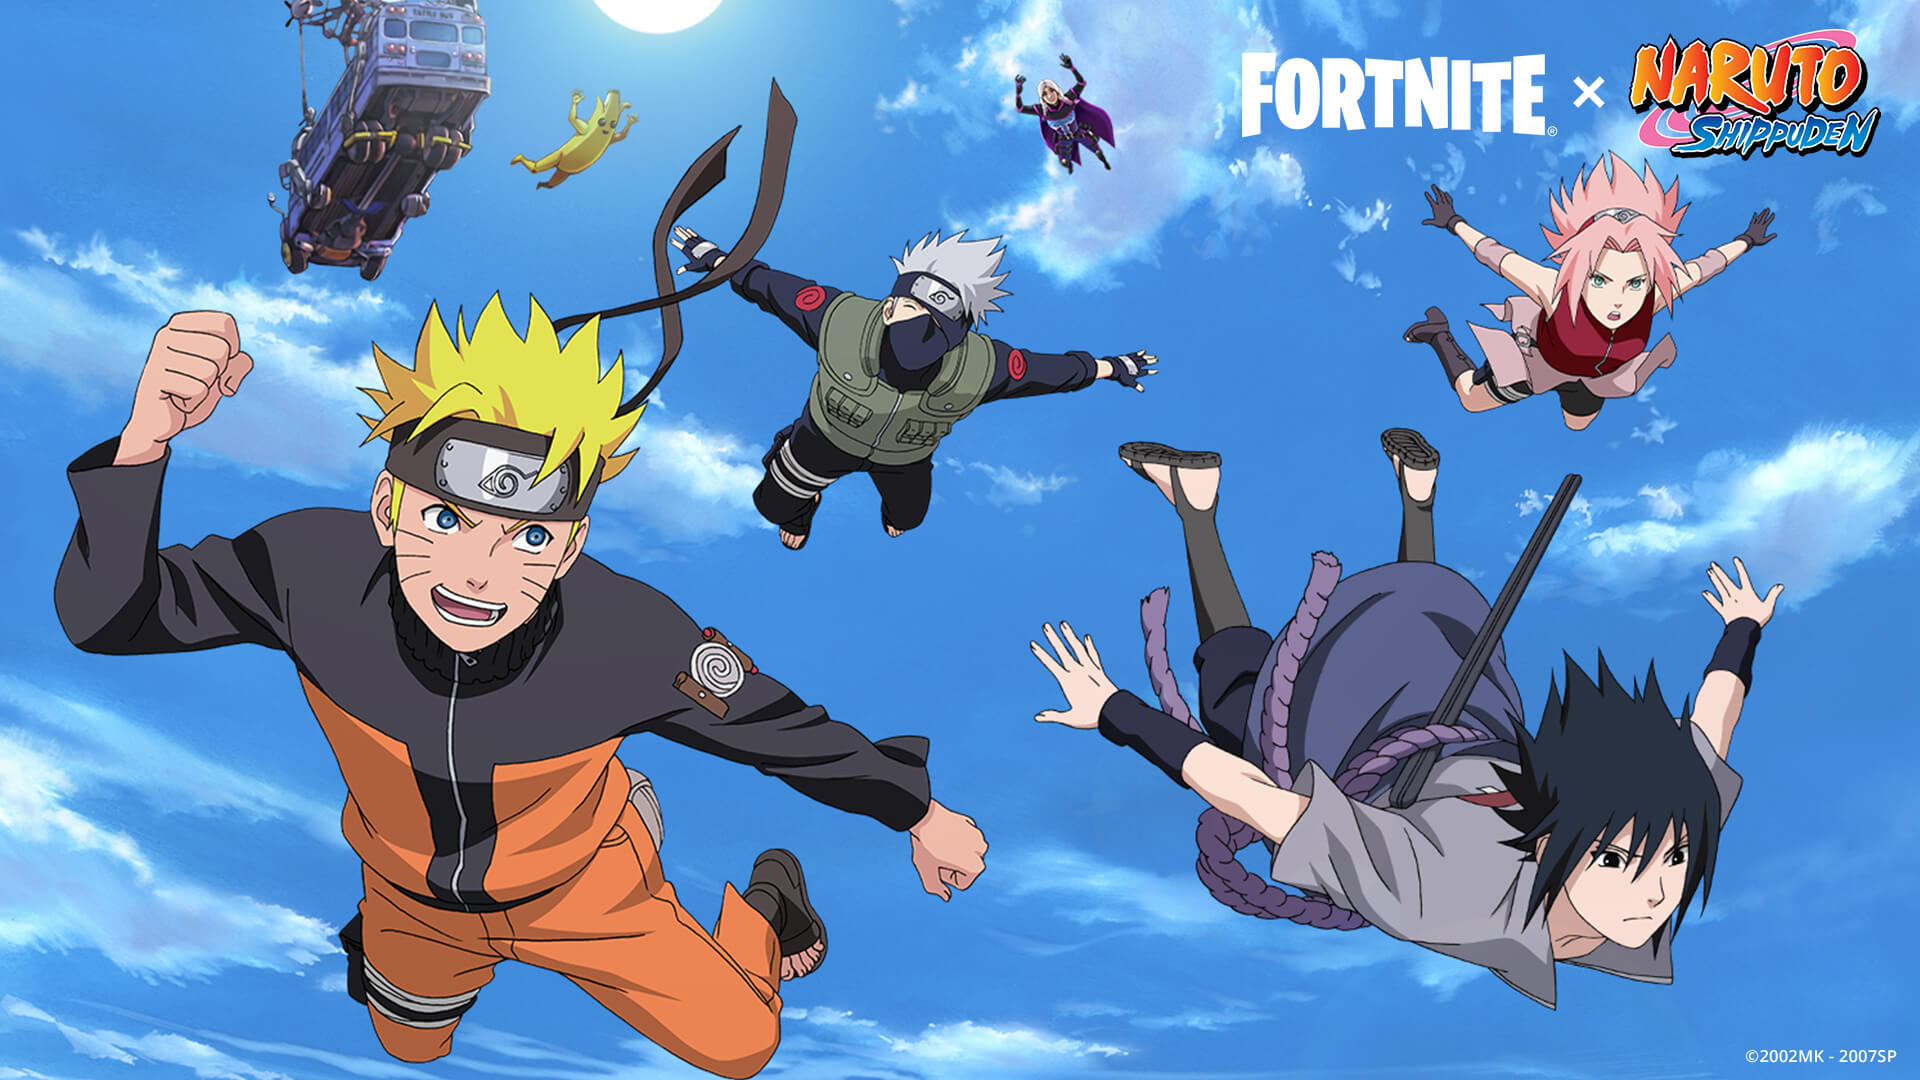 Fortnite Naruto Shinobi Teamwork Učitavanje ekrana En 1920x1080 A344ea57a6a6 1